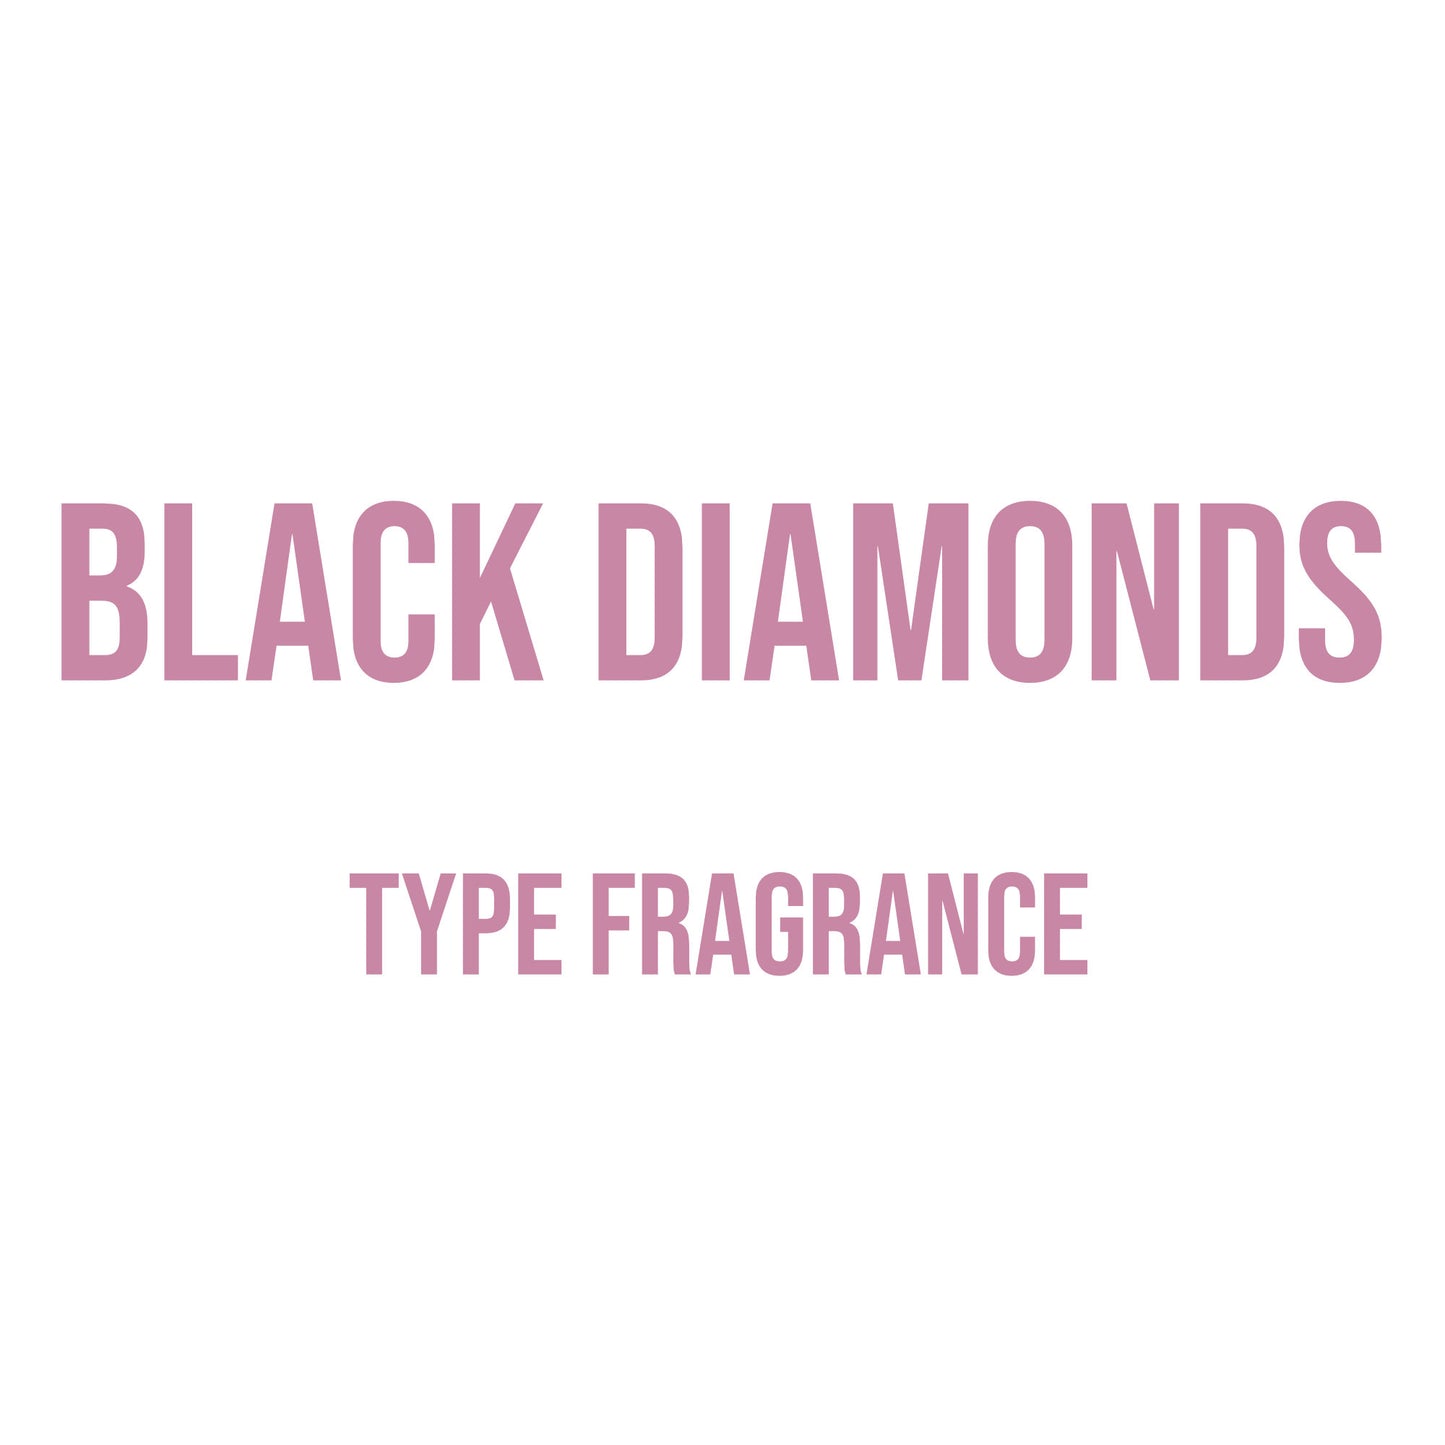 Black Diamonds Type Fragrance